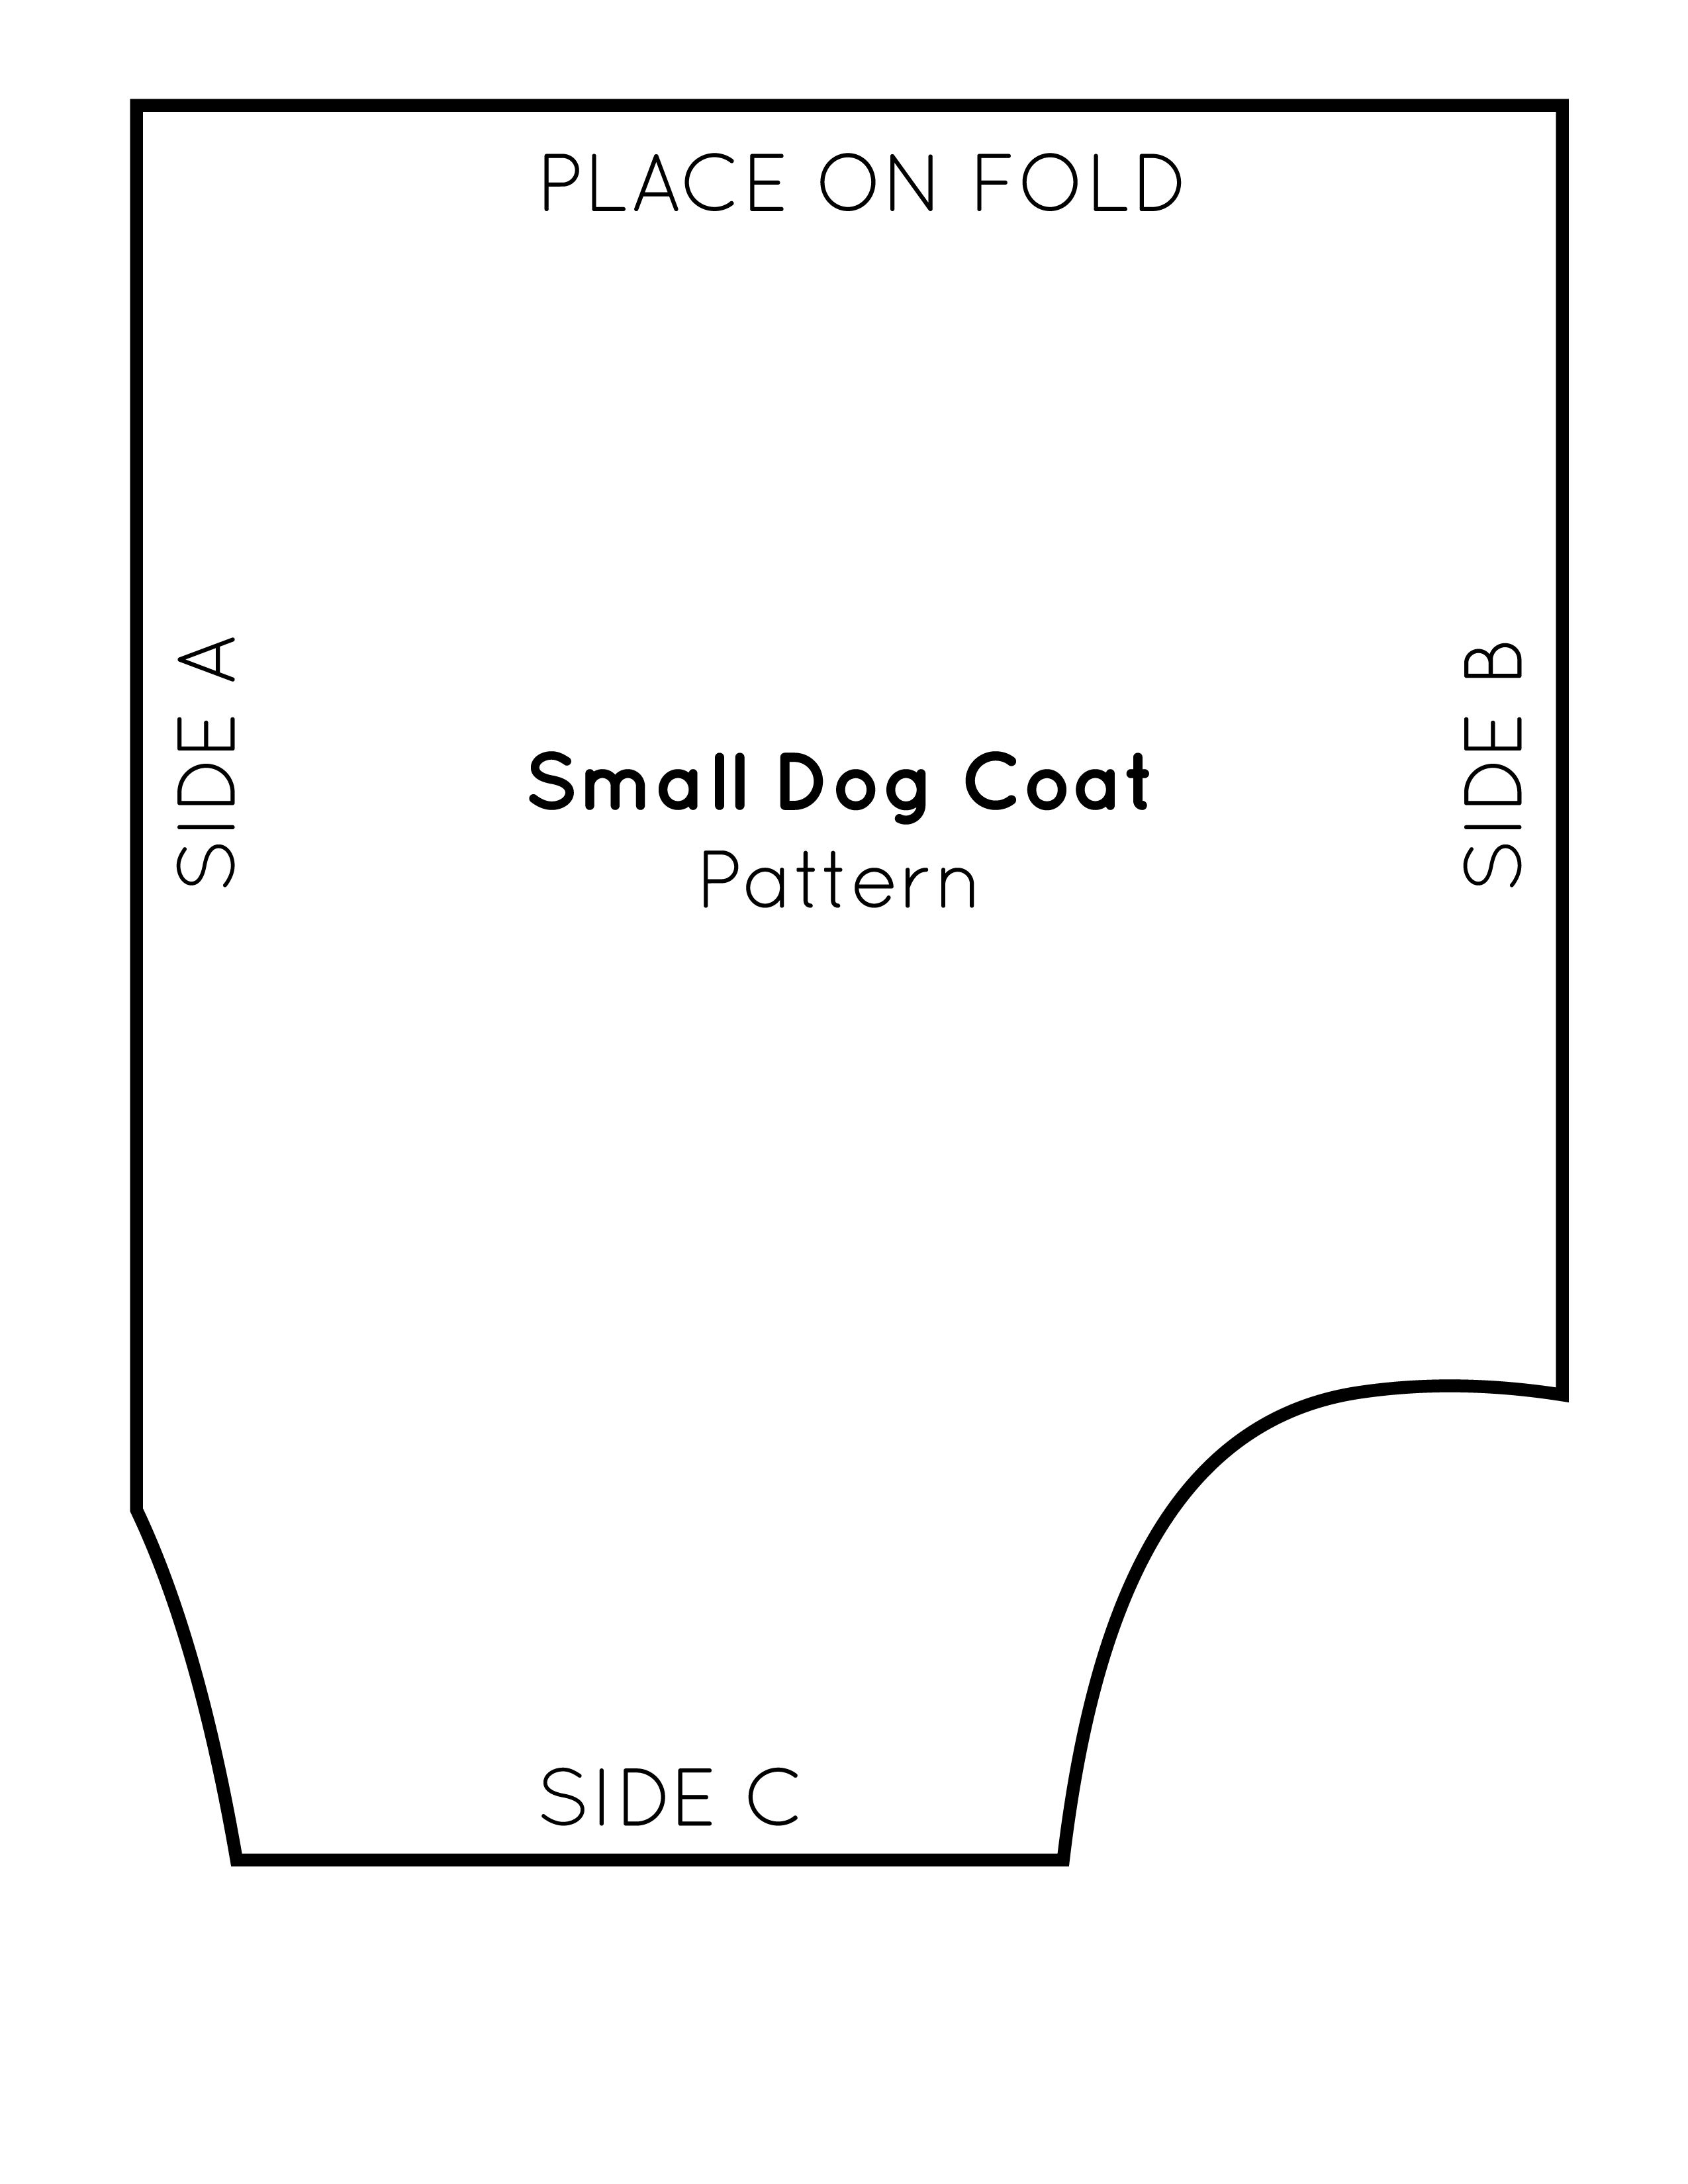 beginner-template-dog-coat-sewing-patterns-free-printable